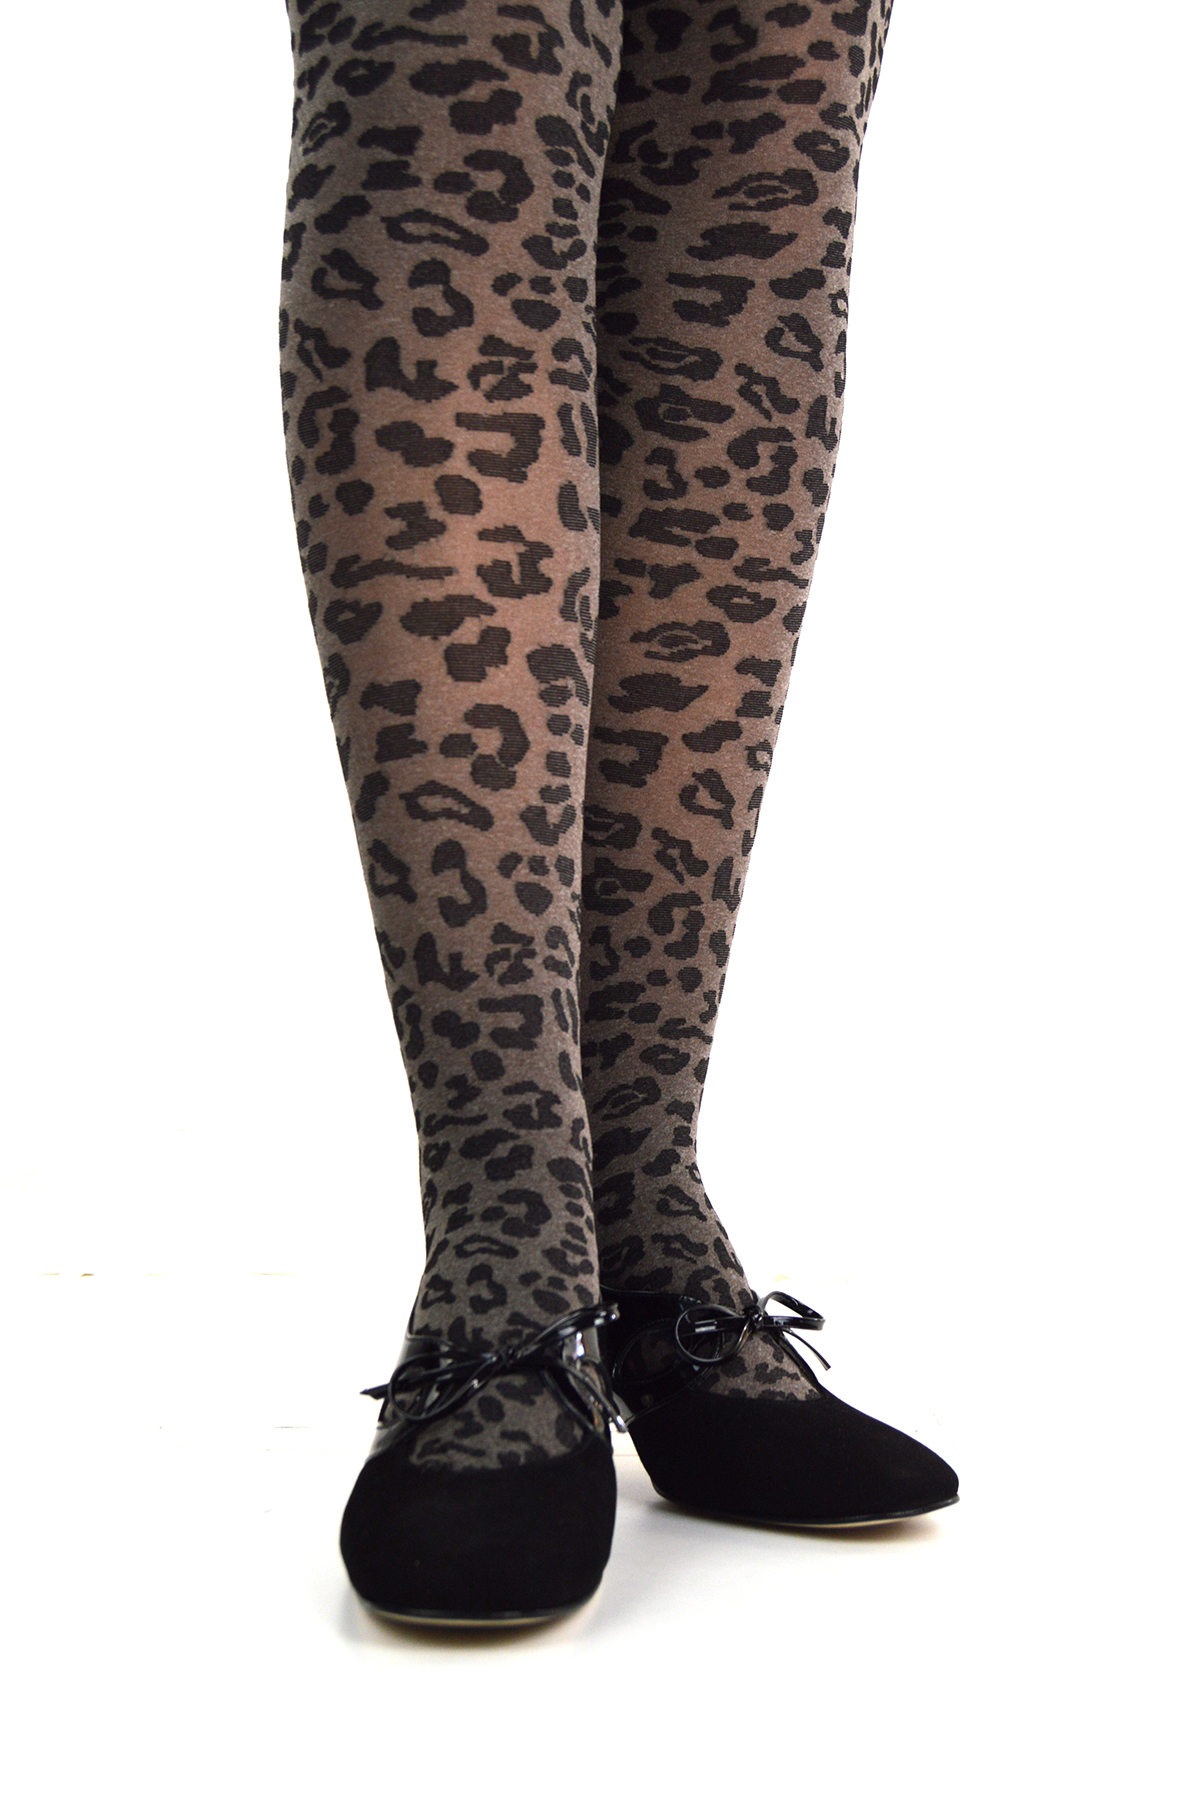 Leopard Pattern Tights – ladies vintage retro 60s – 70s style – Mod Shoes